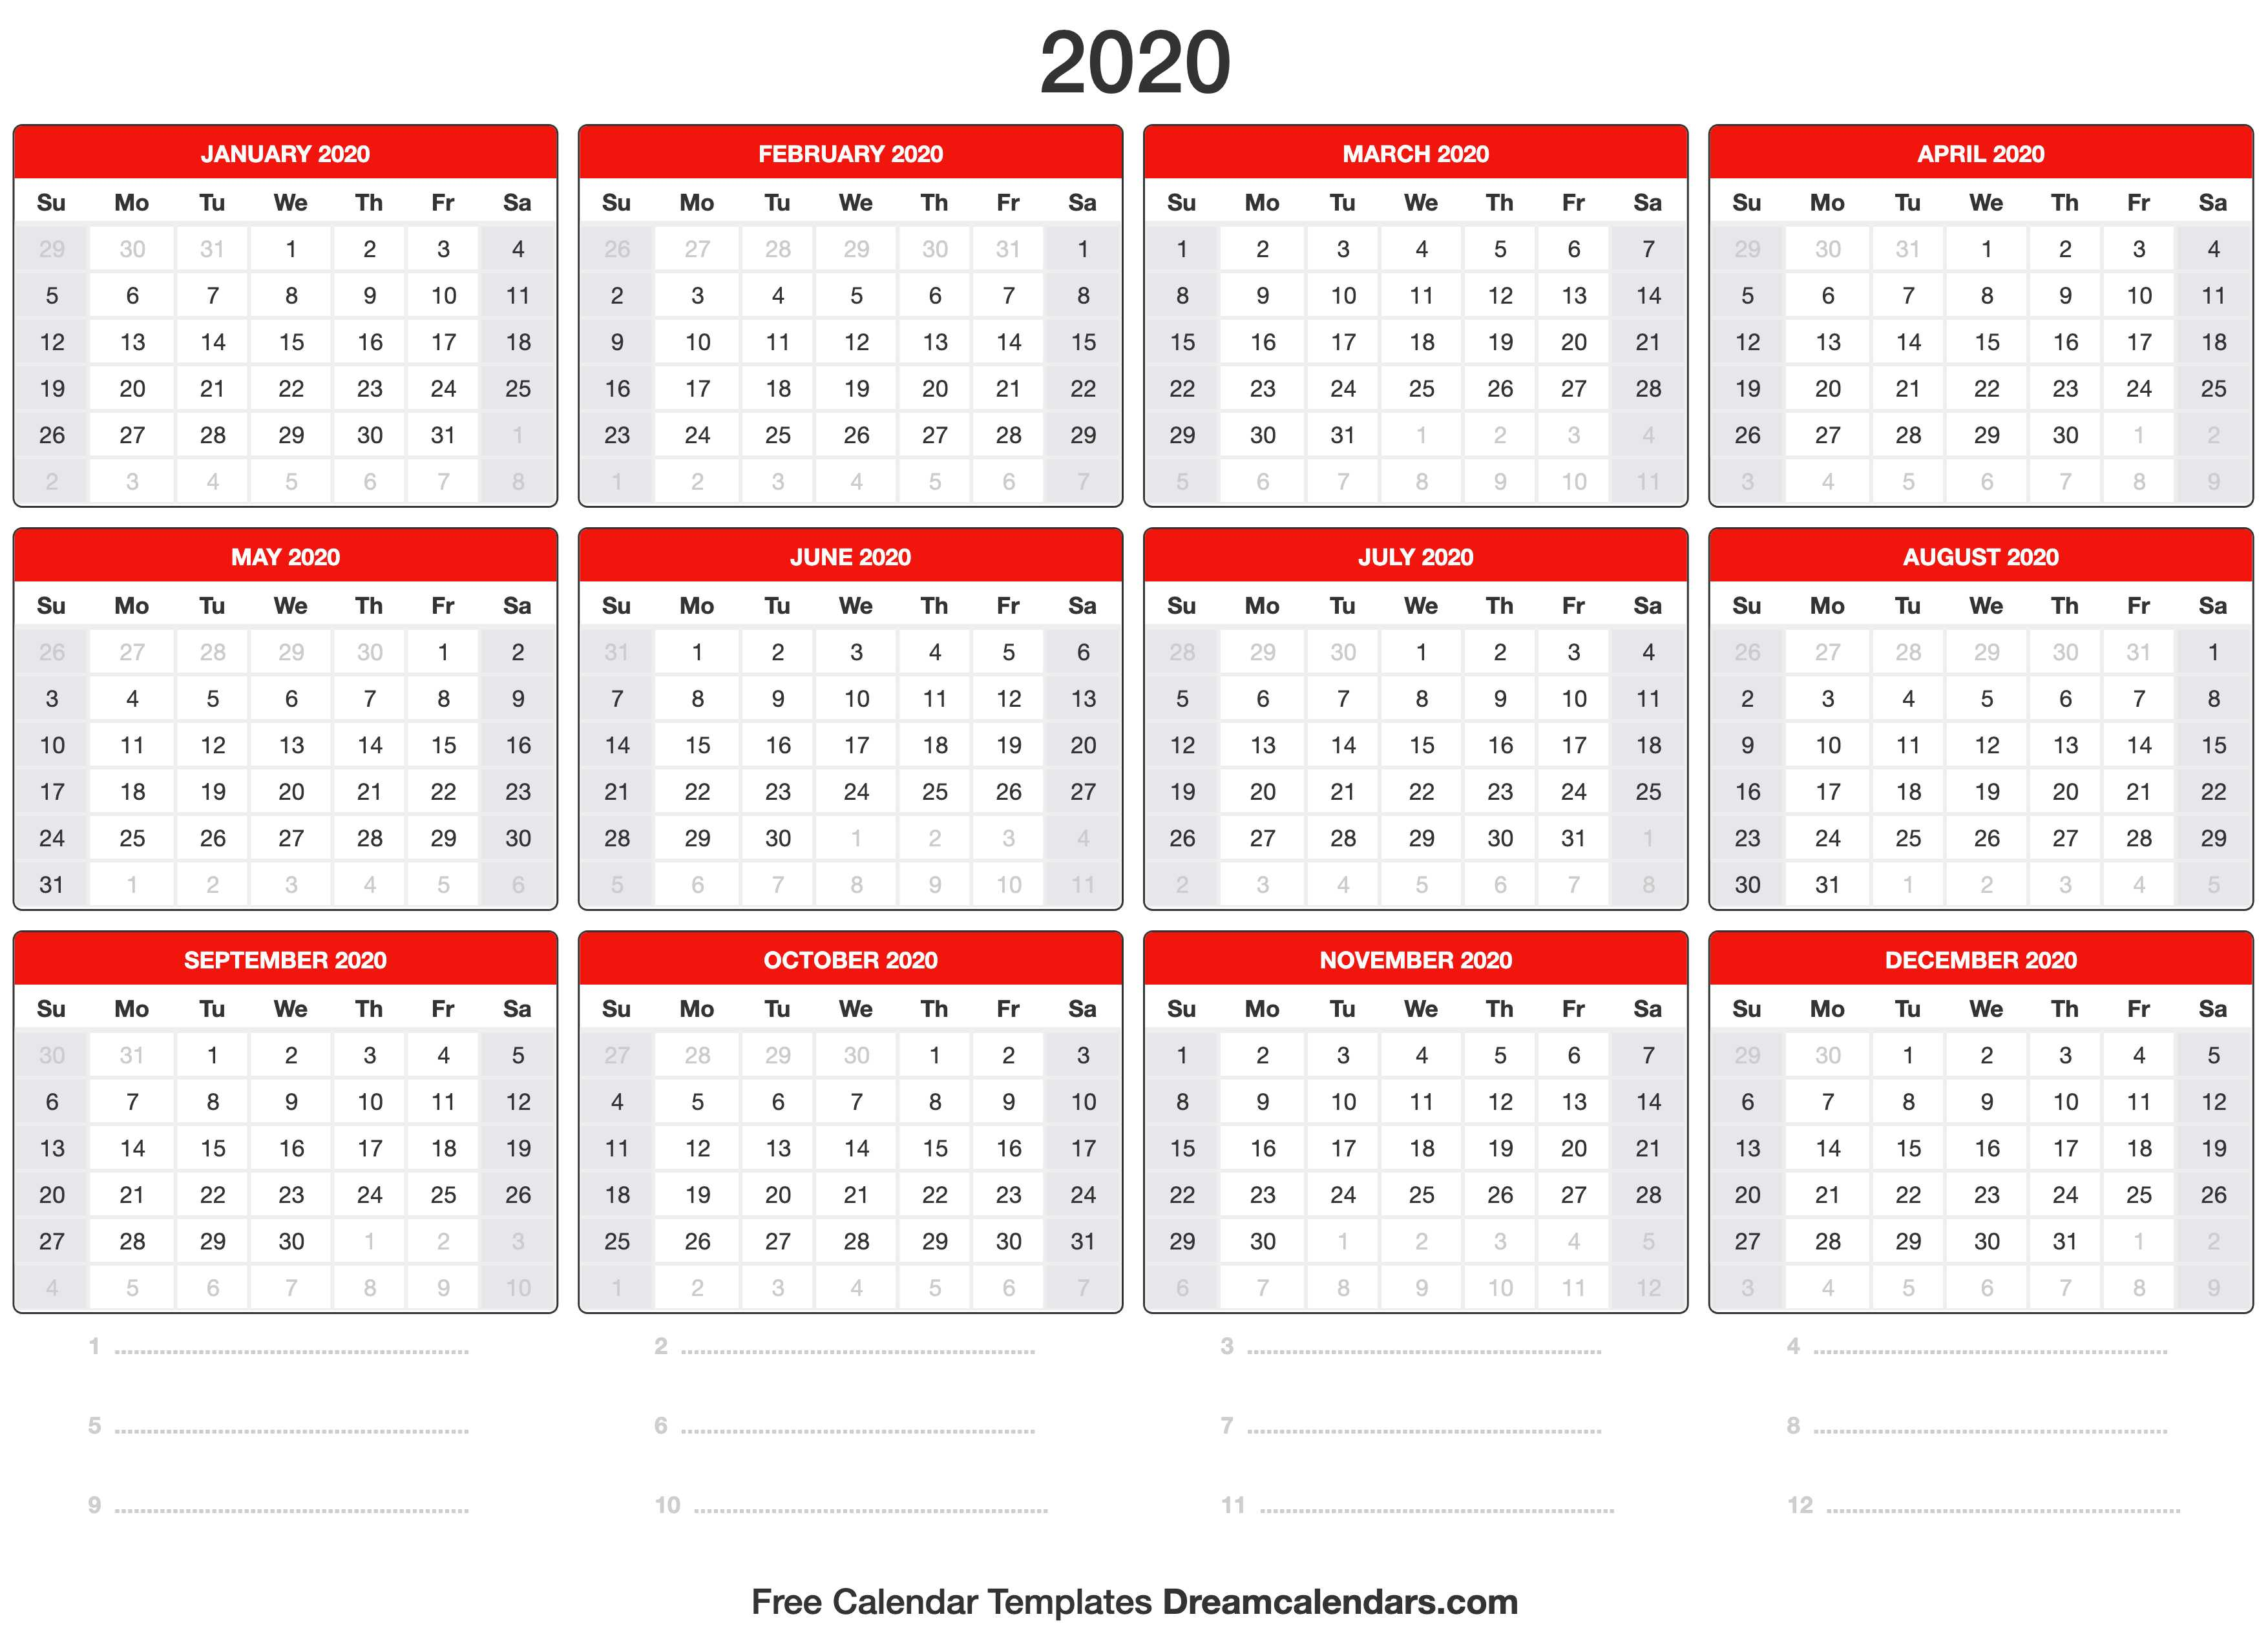 Dream Calendars - Make Your Calendar Template Blog: 2019